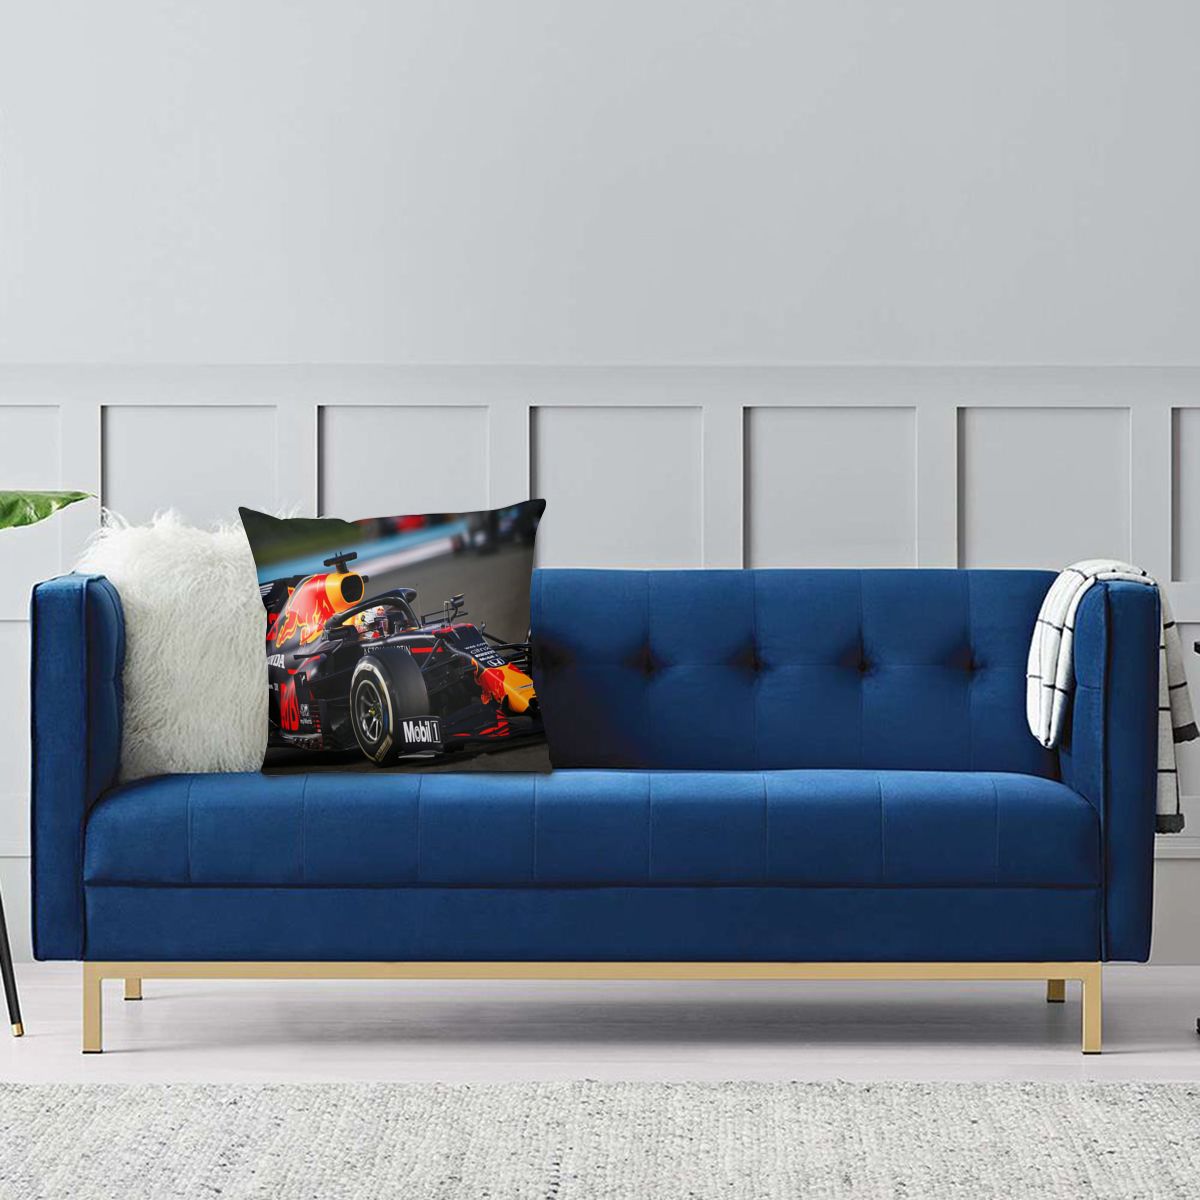 F1 Redbull Racing Team Cushion Cover Home Decor Fan Merchandise Great Gift